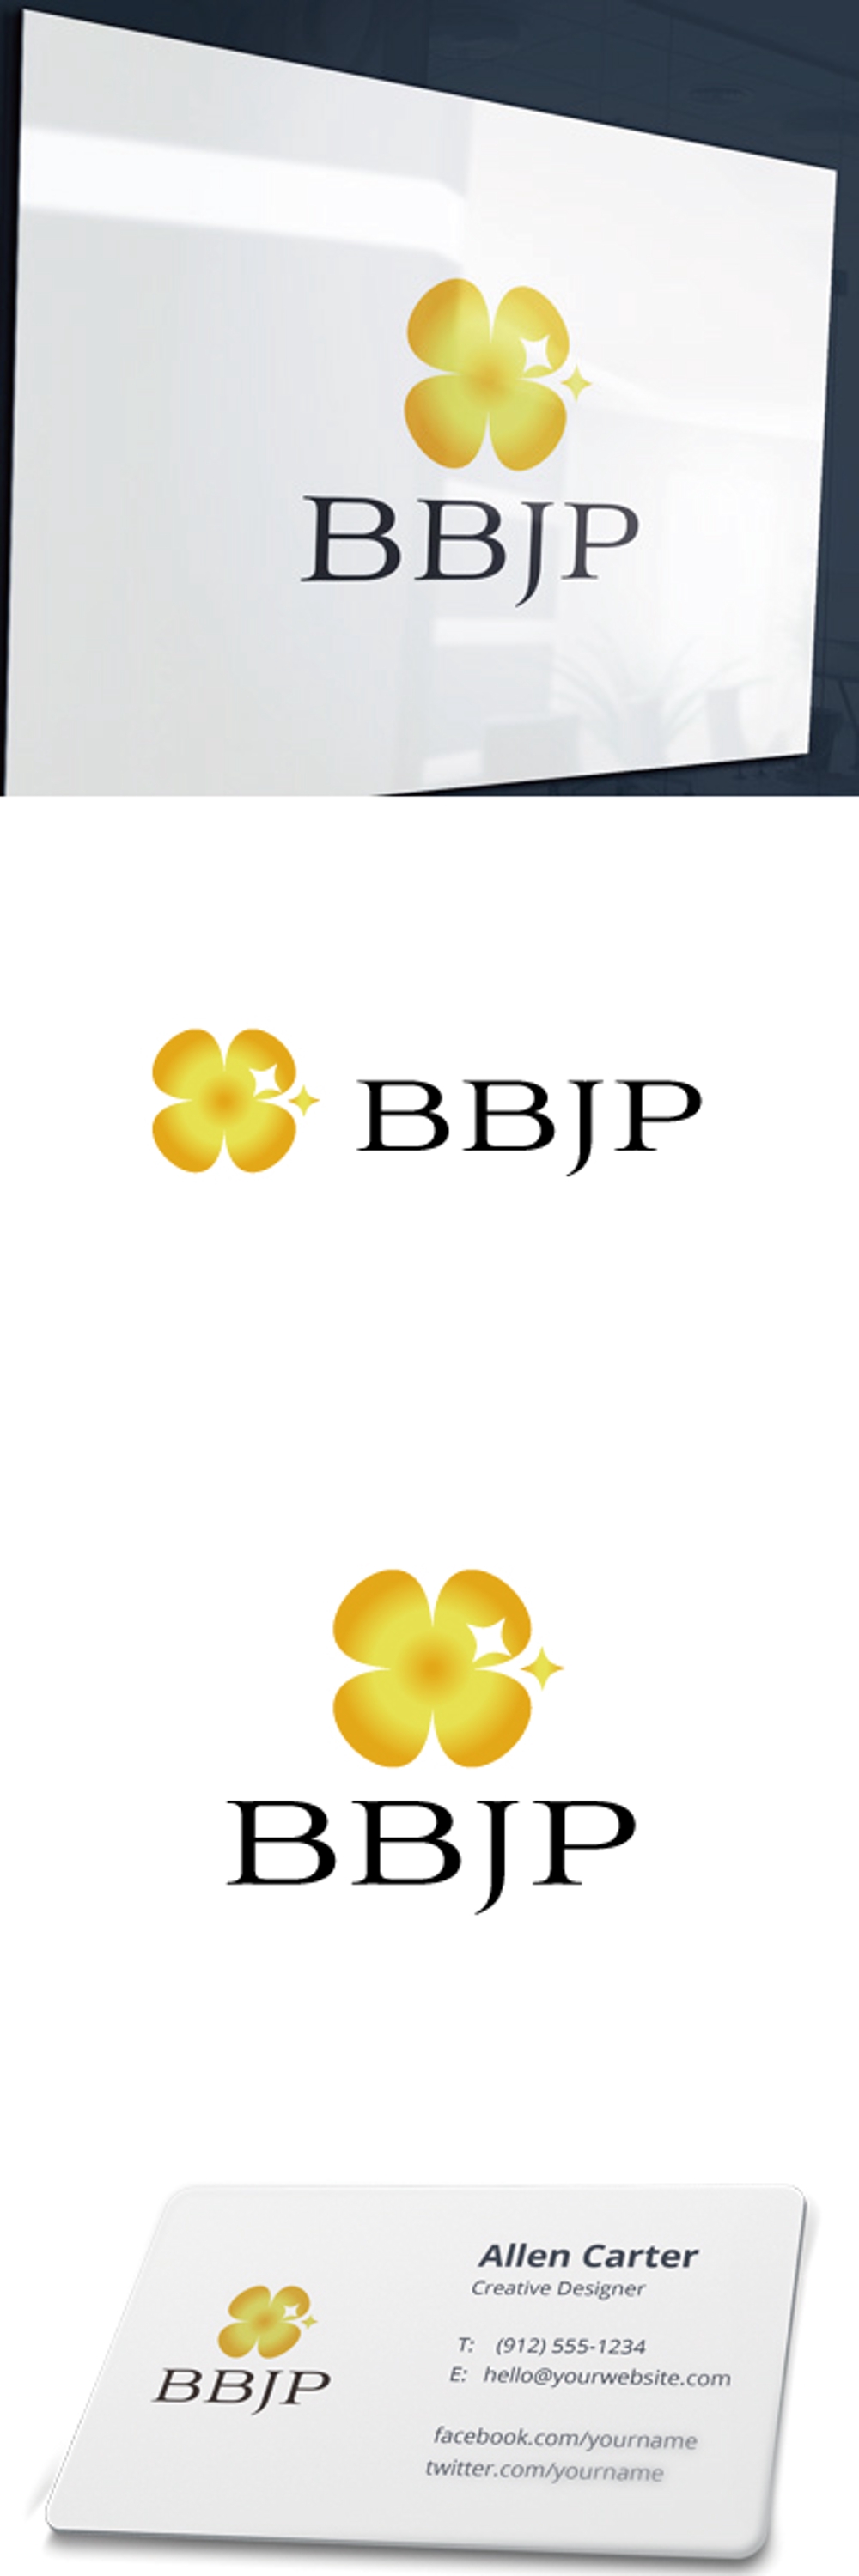 BBJP.jpg